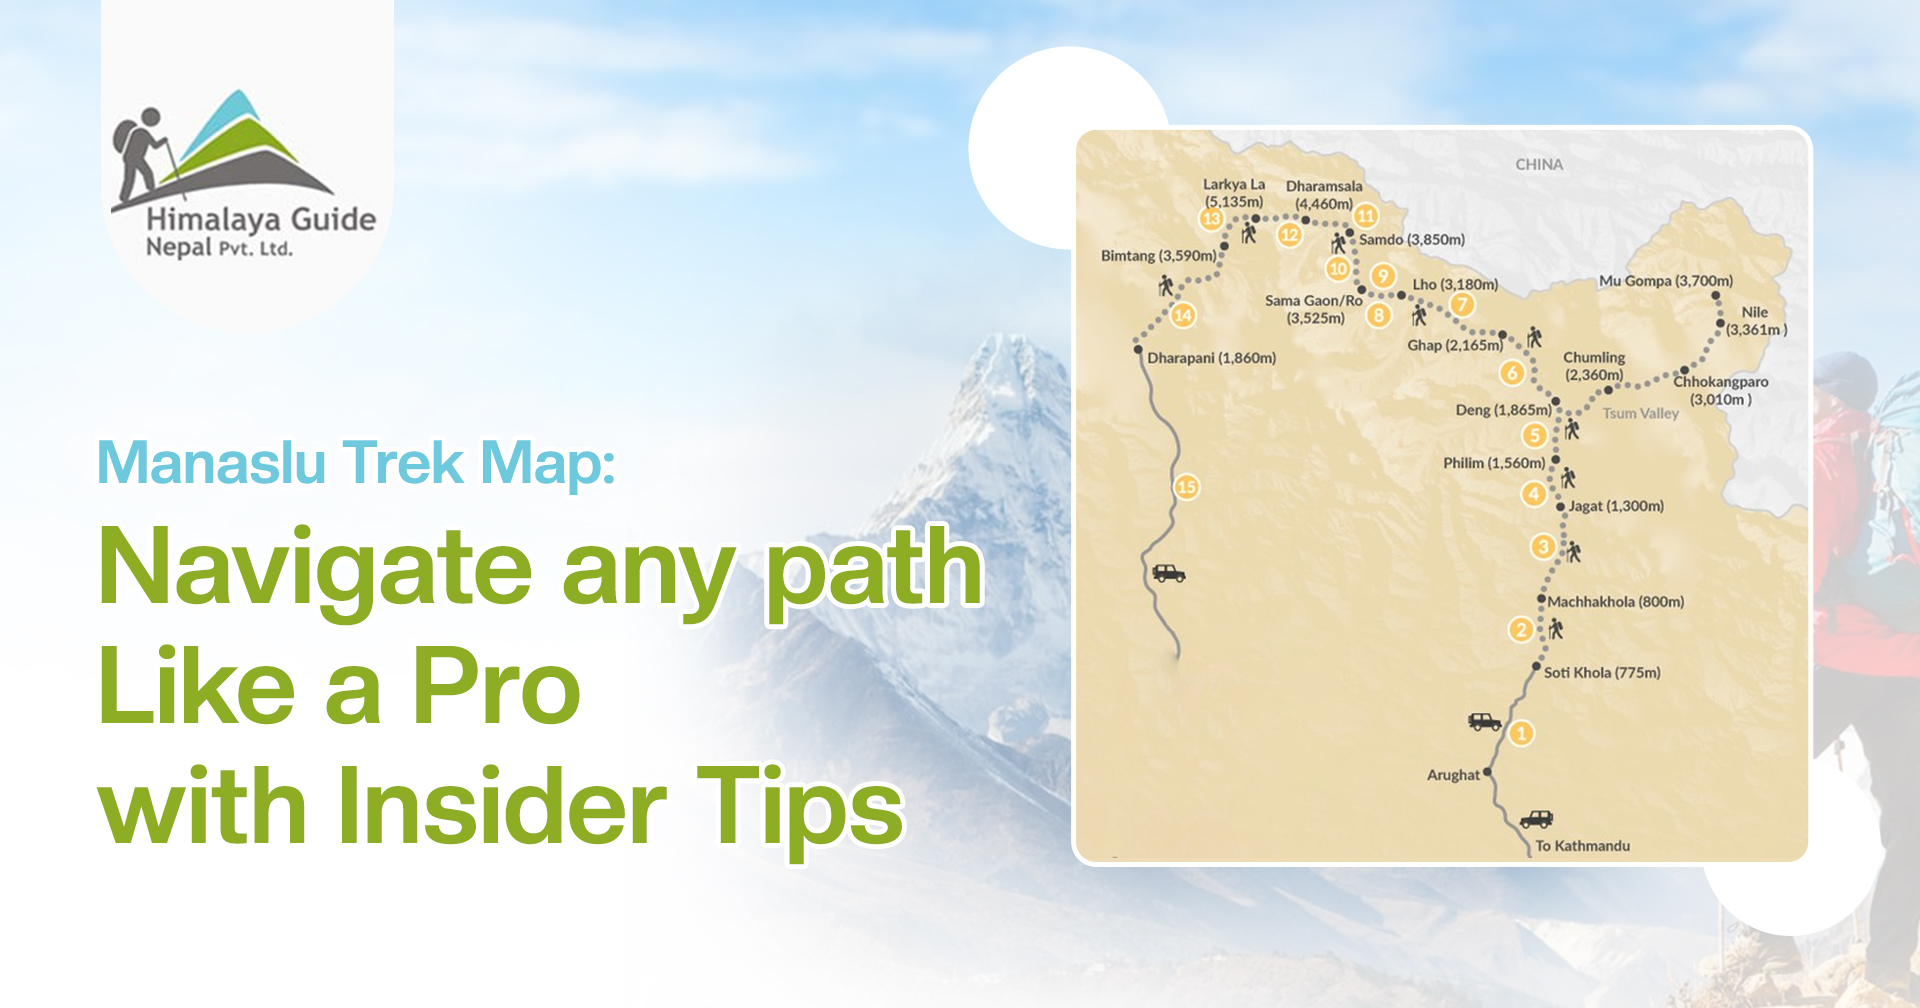 Manaslu Trek Map: Navigate any path Like a Pro with Insider Tips